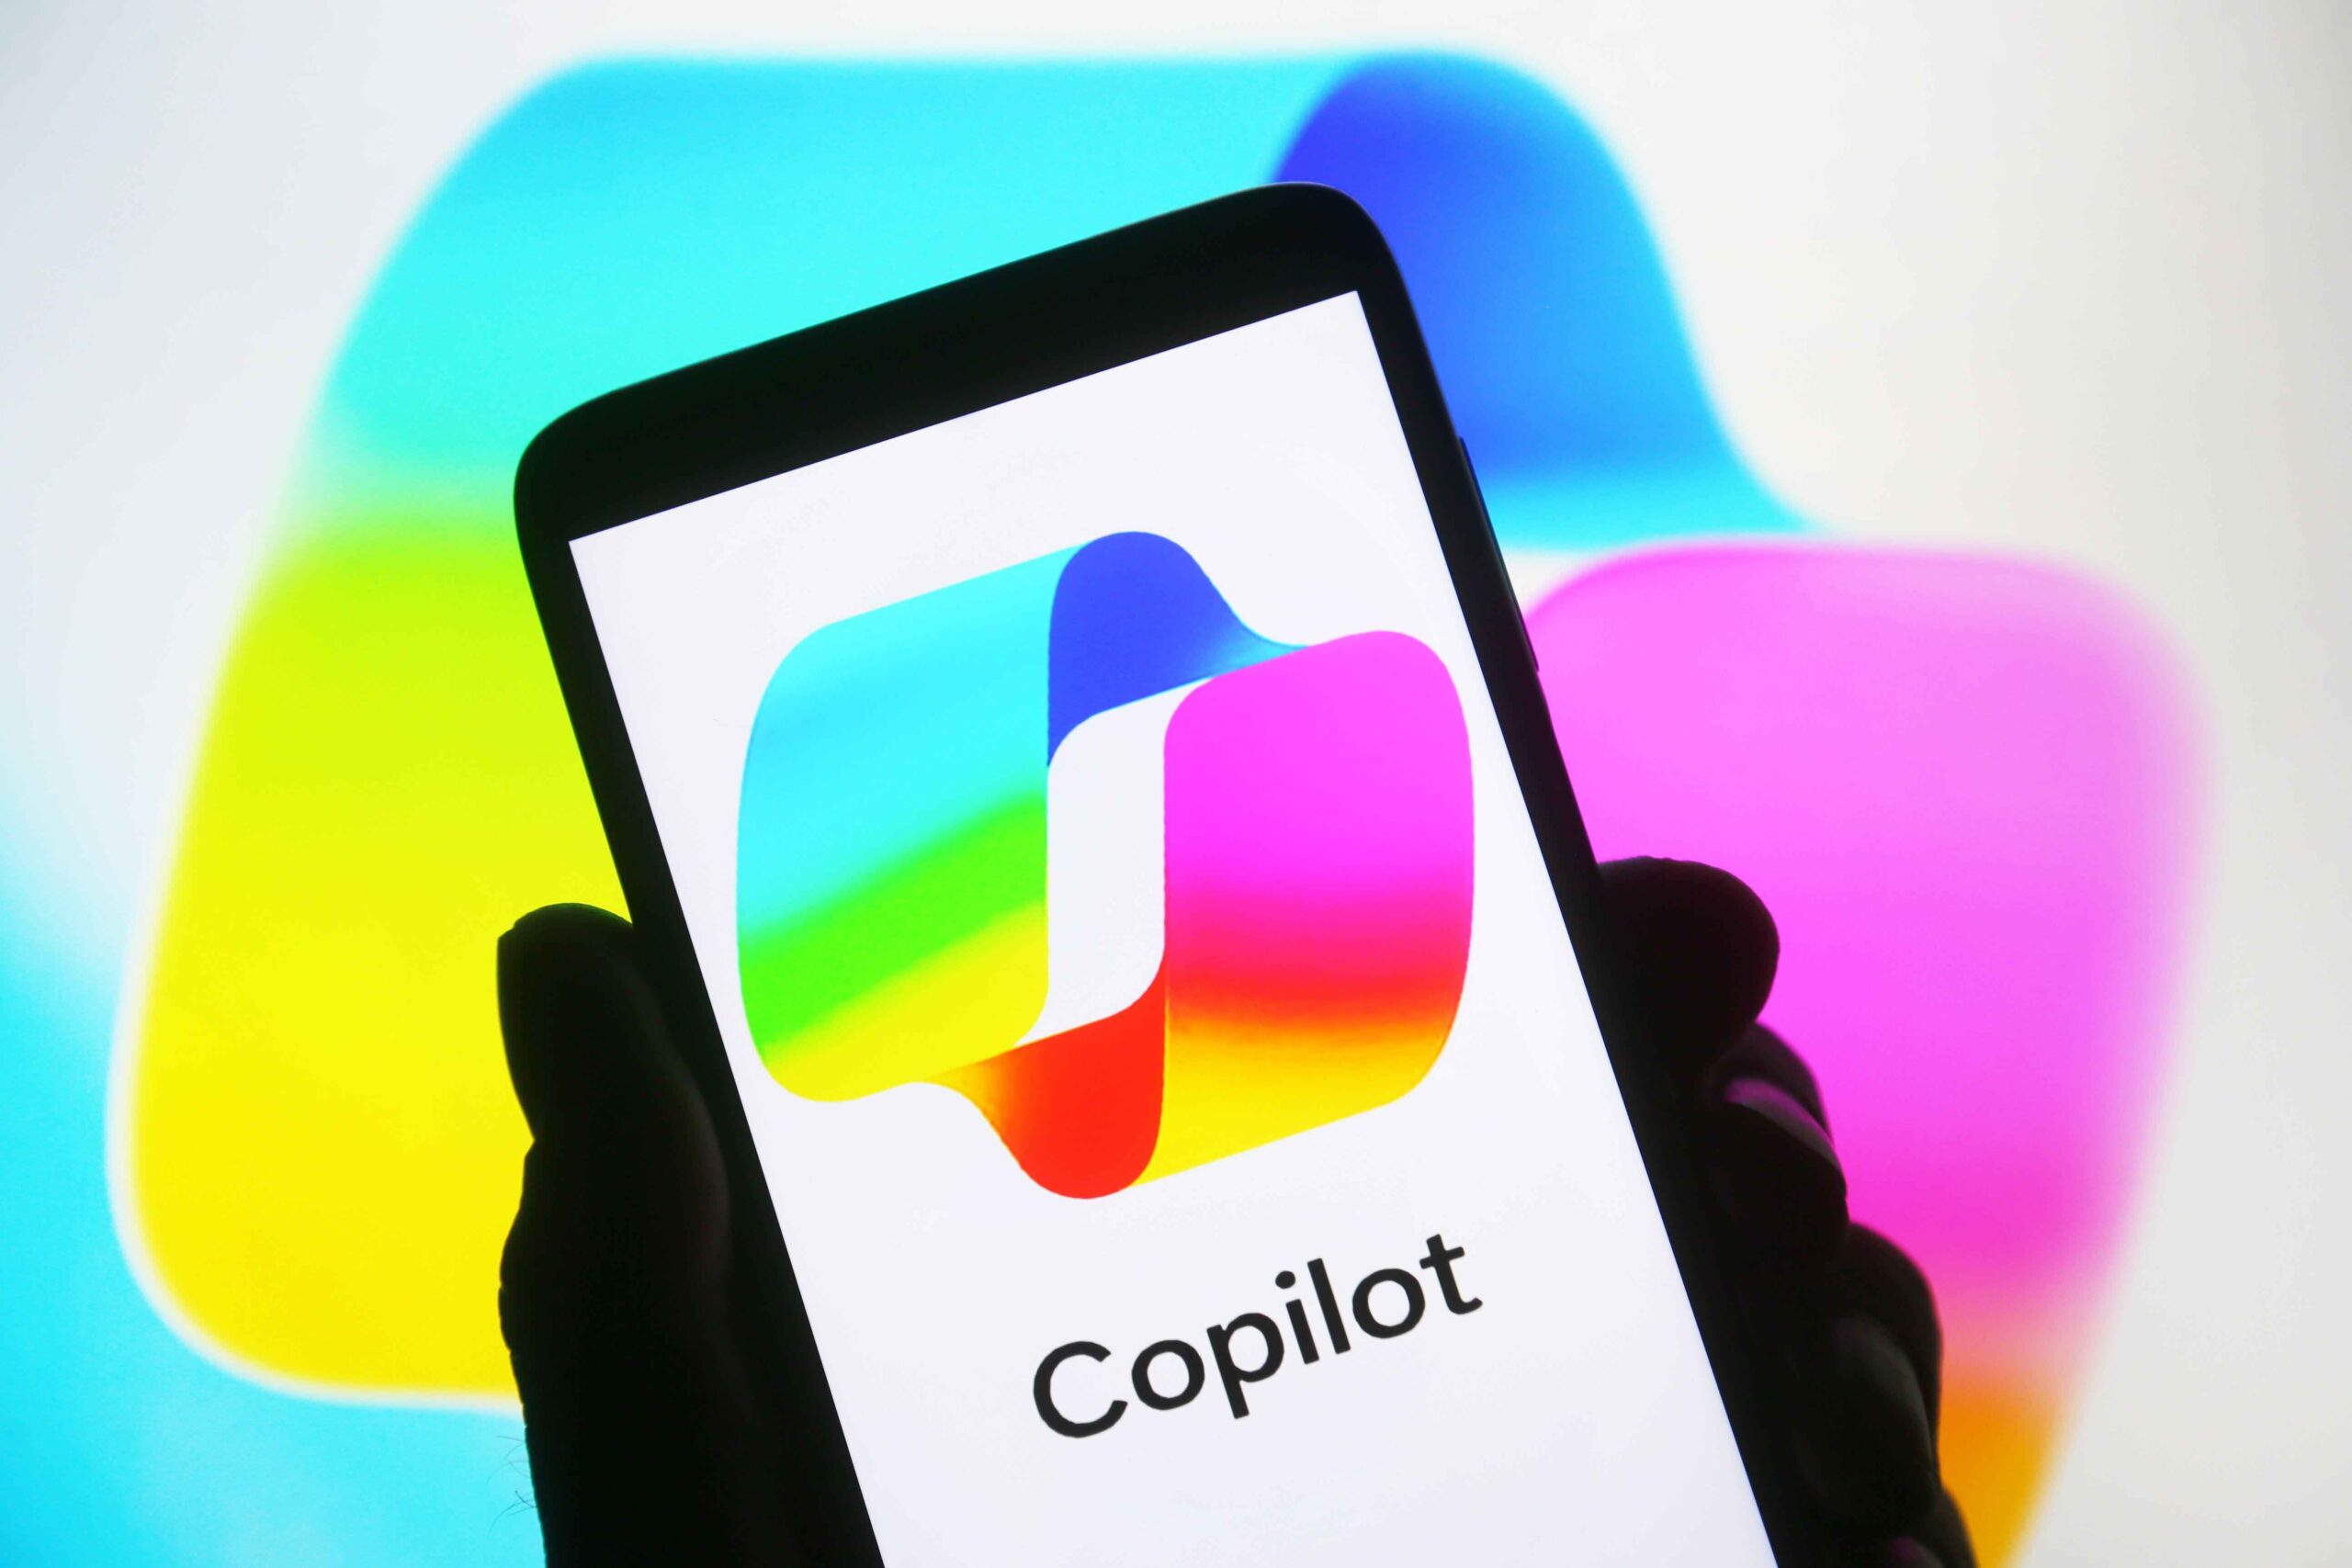 Microsoft Uploads a Solo Copilot AI App to the Google Play Store